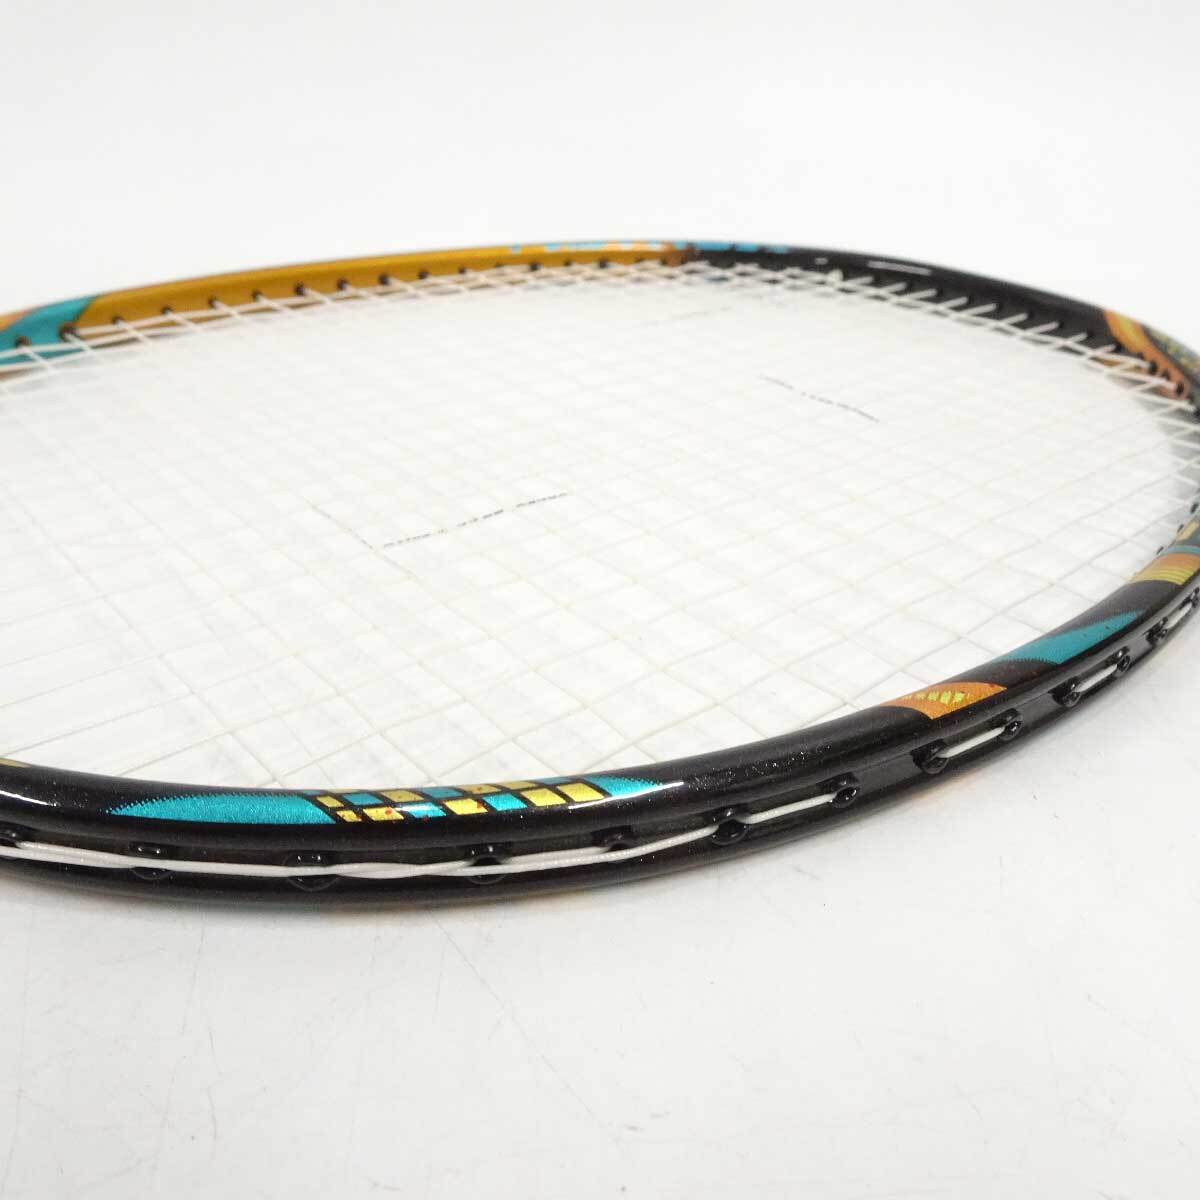 [ used ] Yonex Astro ks88D PRO badminton racket ASTROX Pro 4UG5 YONEX